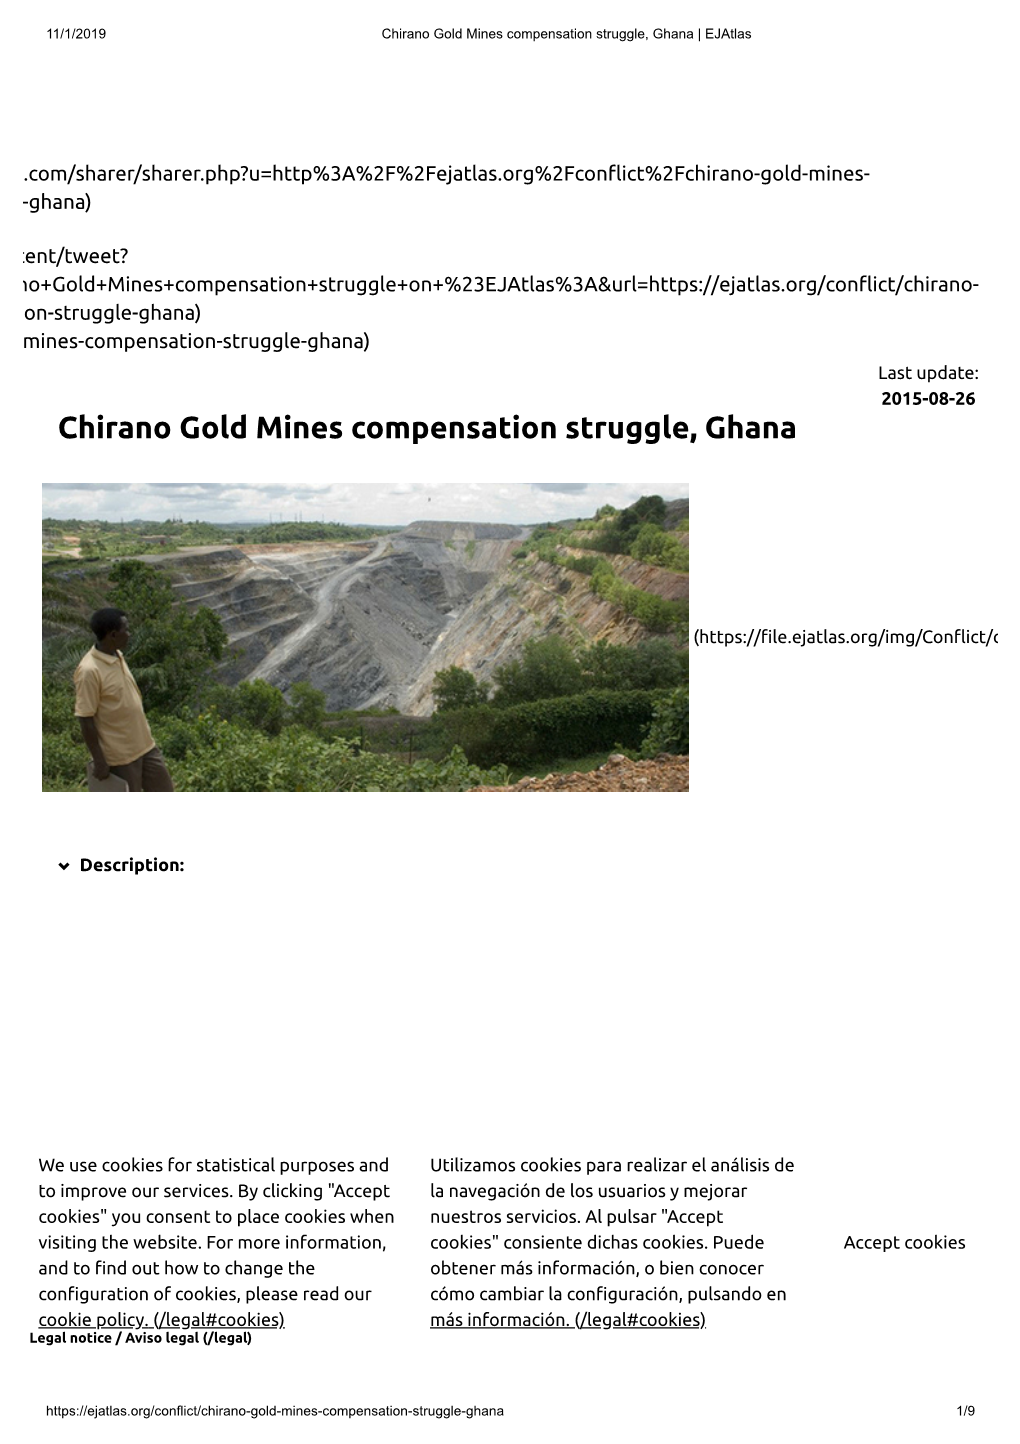 Chirano Gold Mines Compensation Struggle, Ghana | Ejatlas